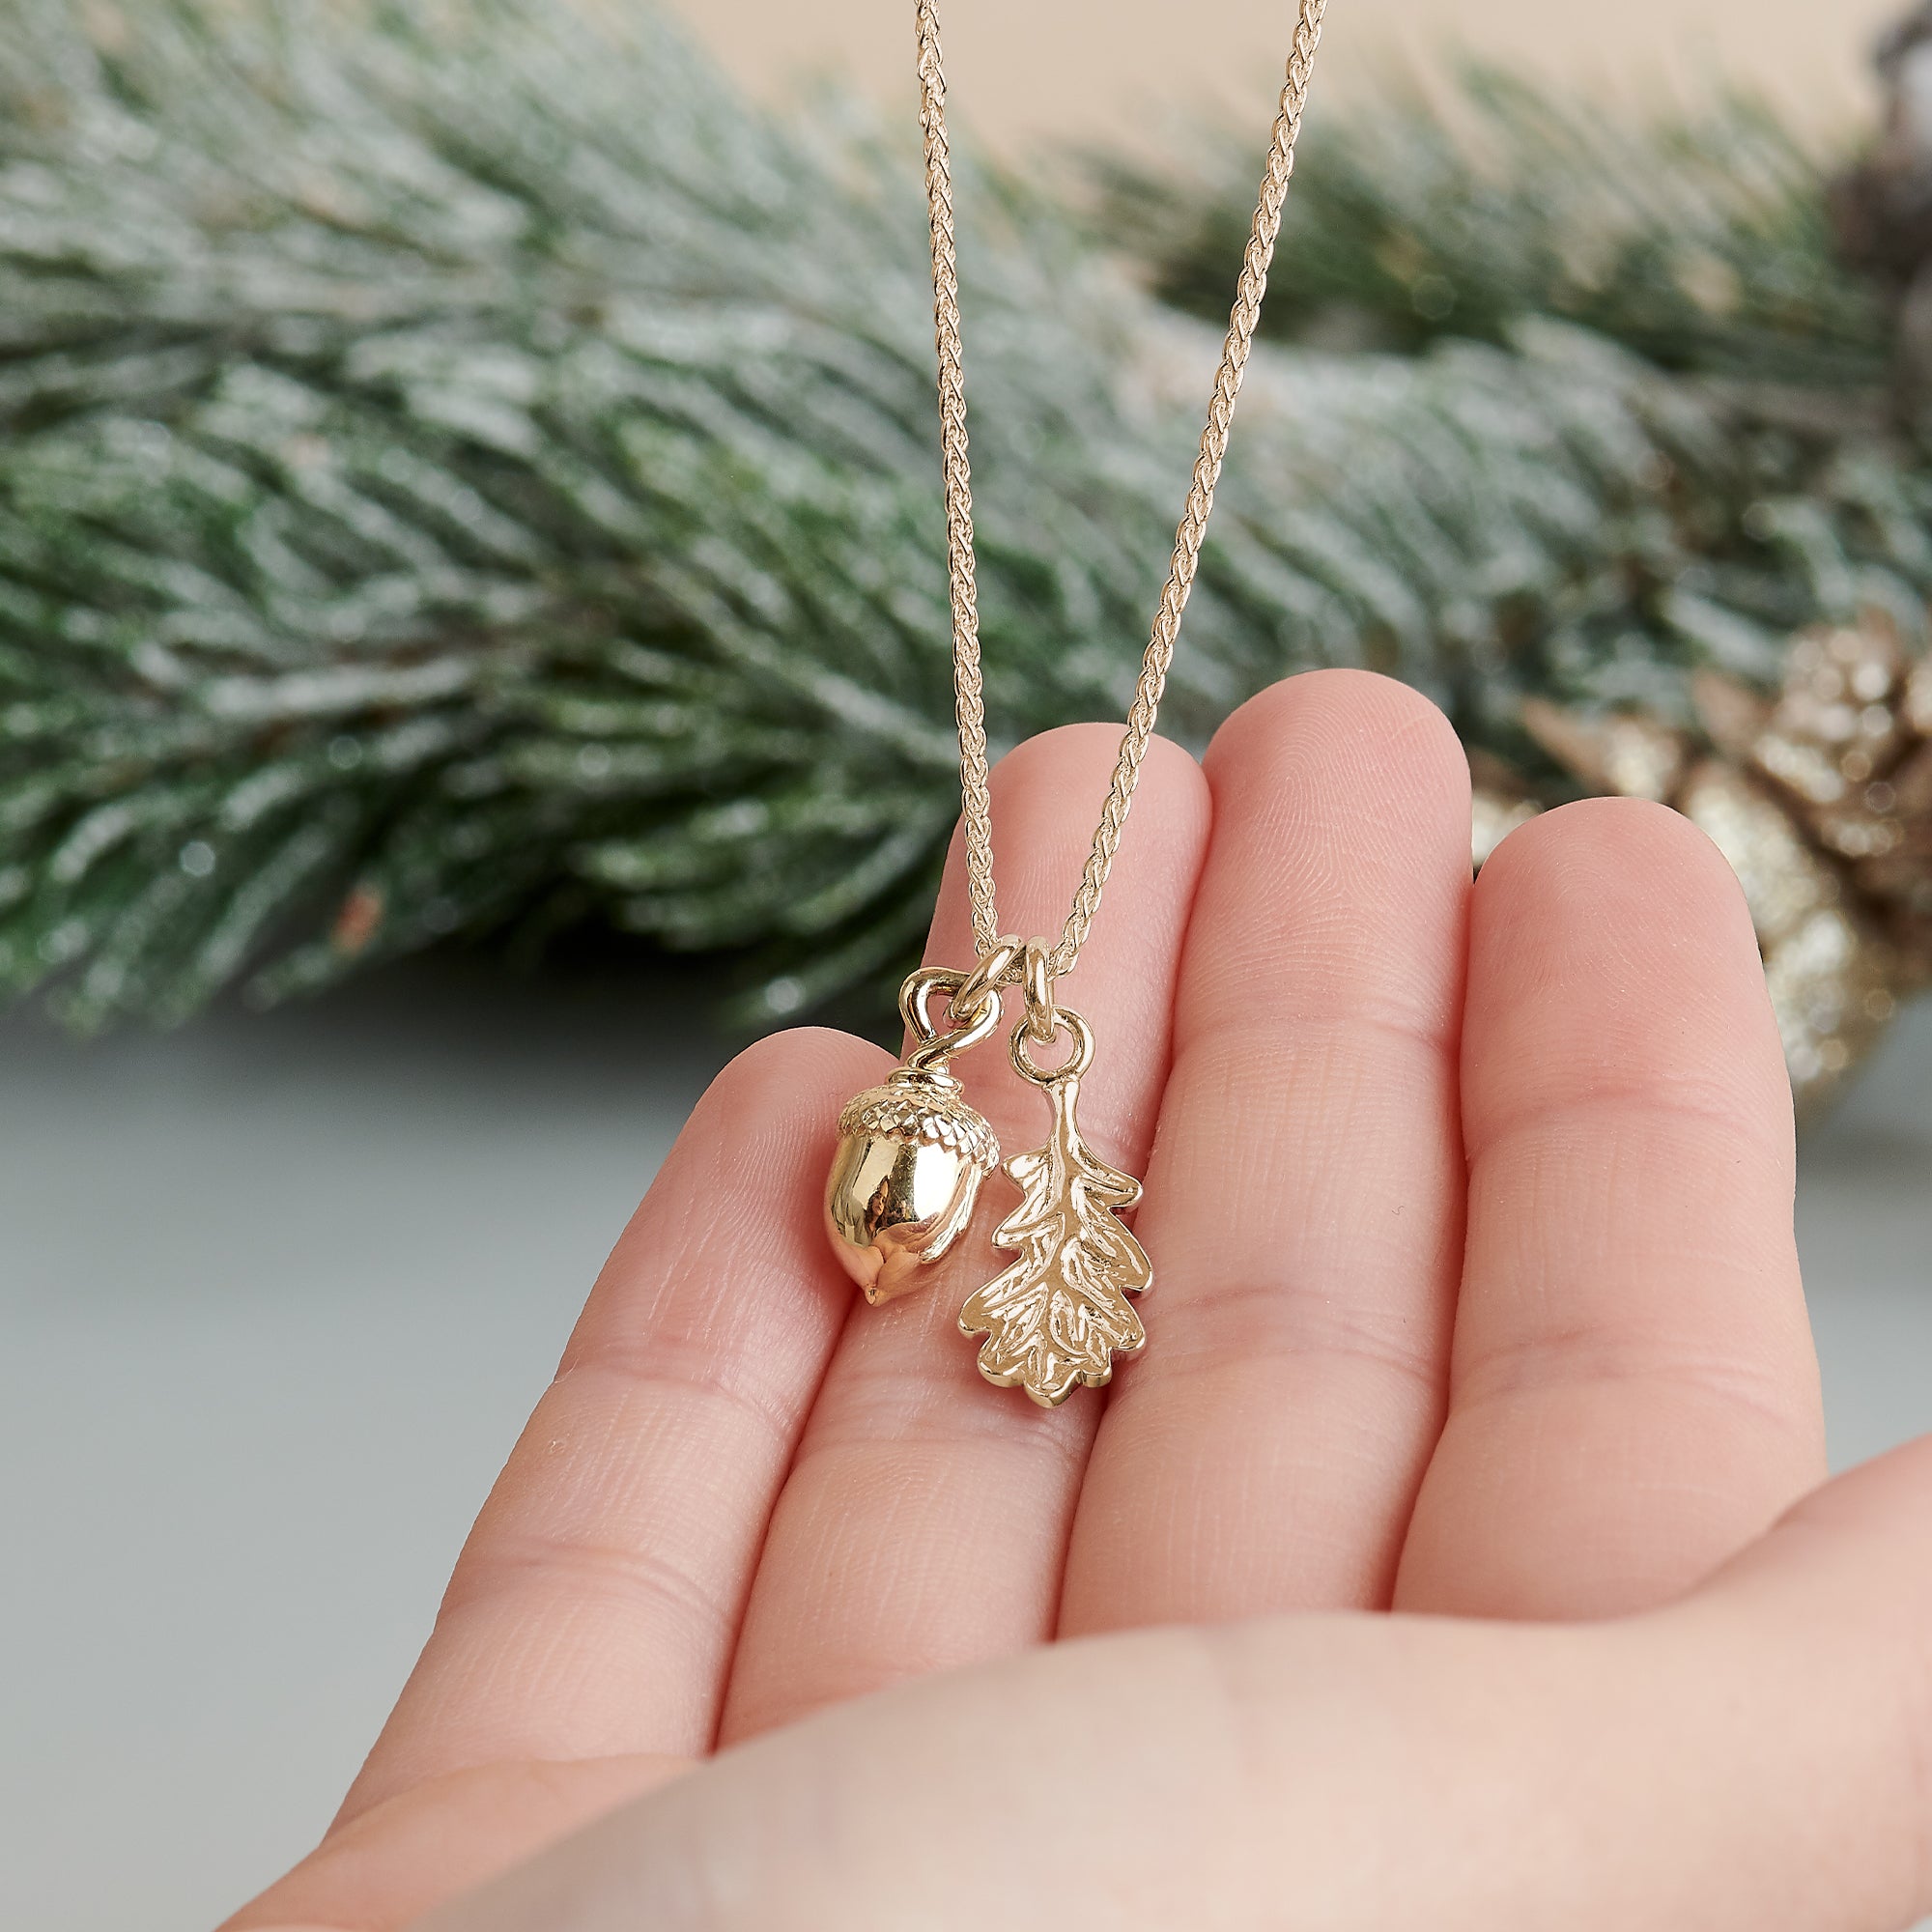 Solid Gold Oak Leaf Pendant with Acorn by Scarlett Jewellery